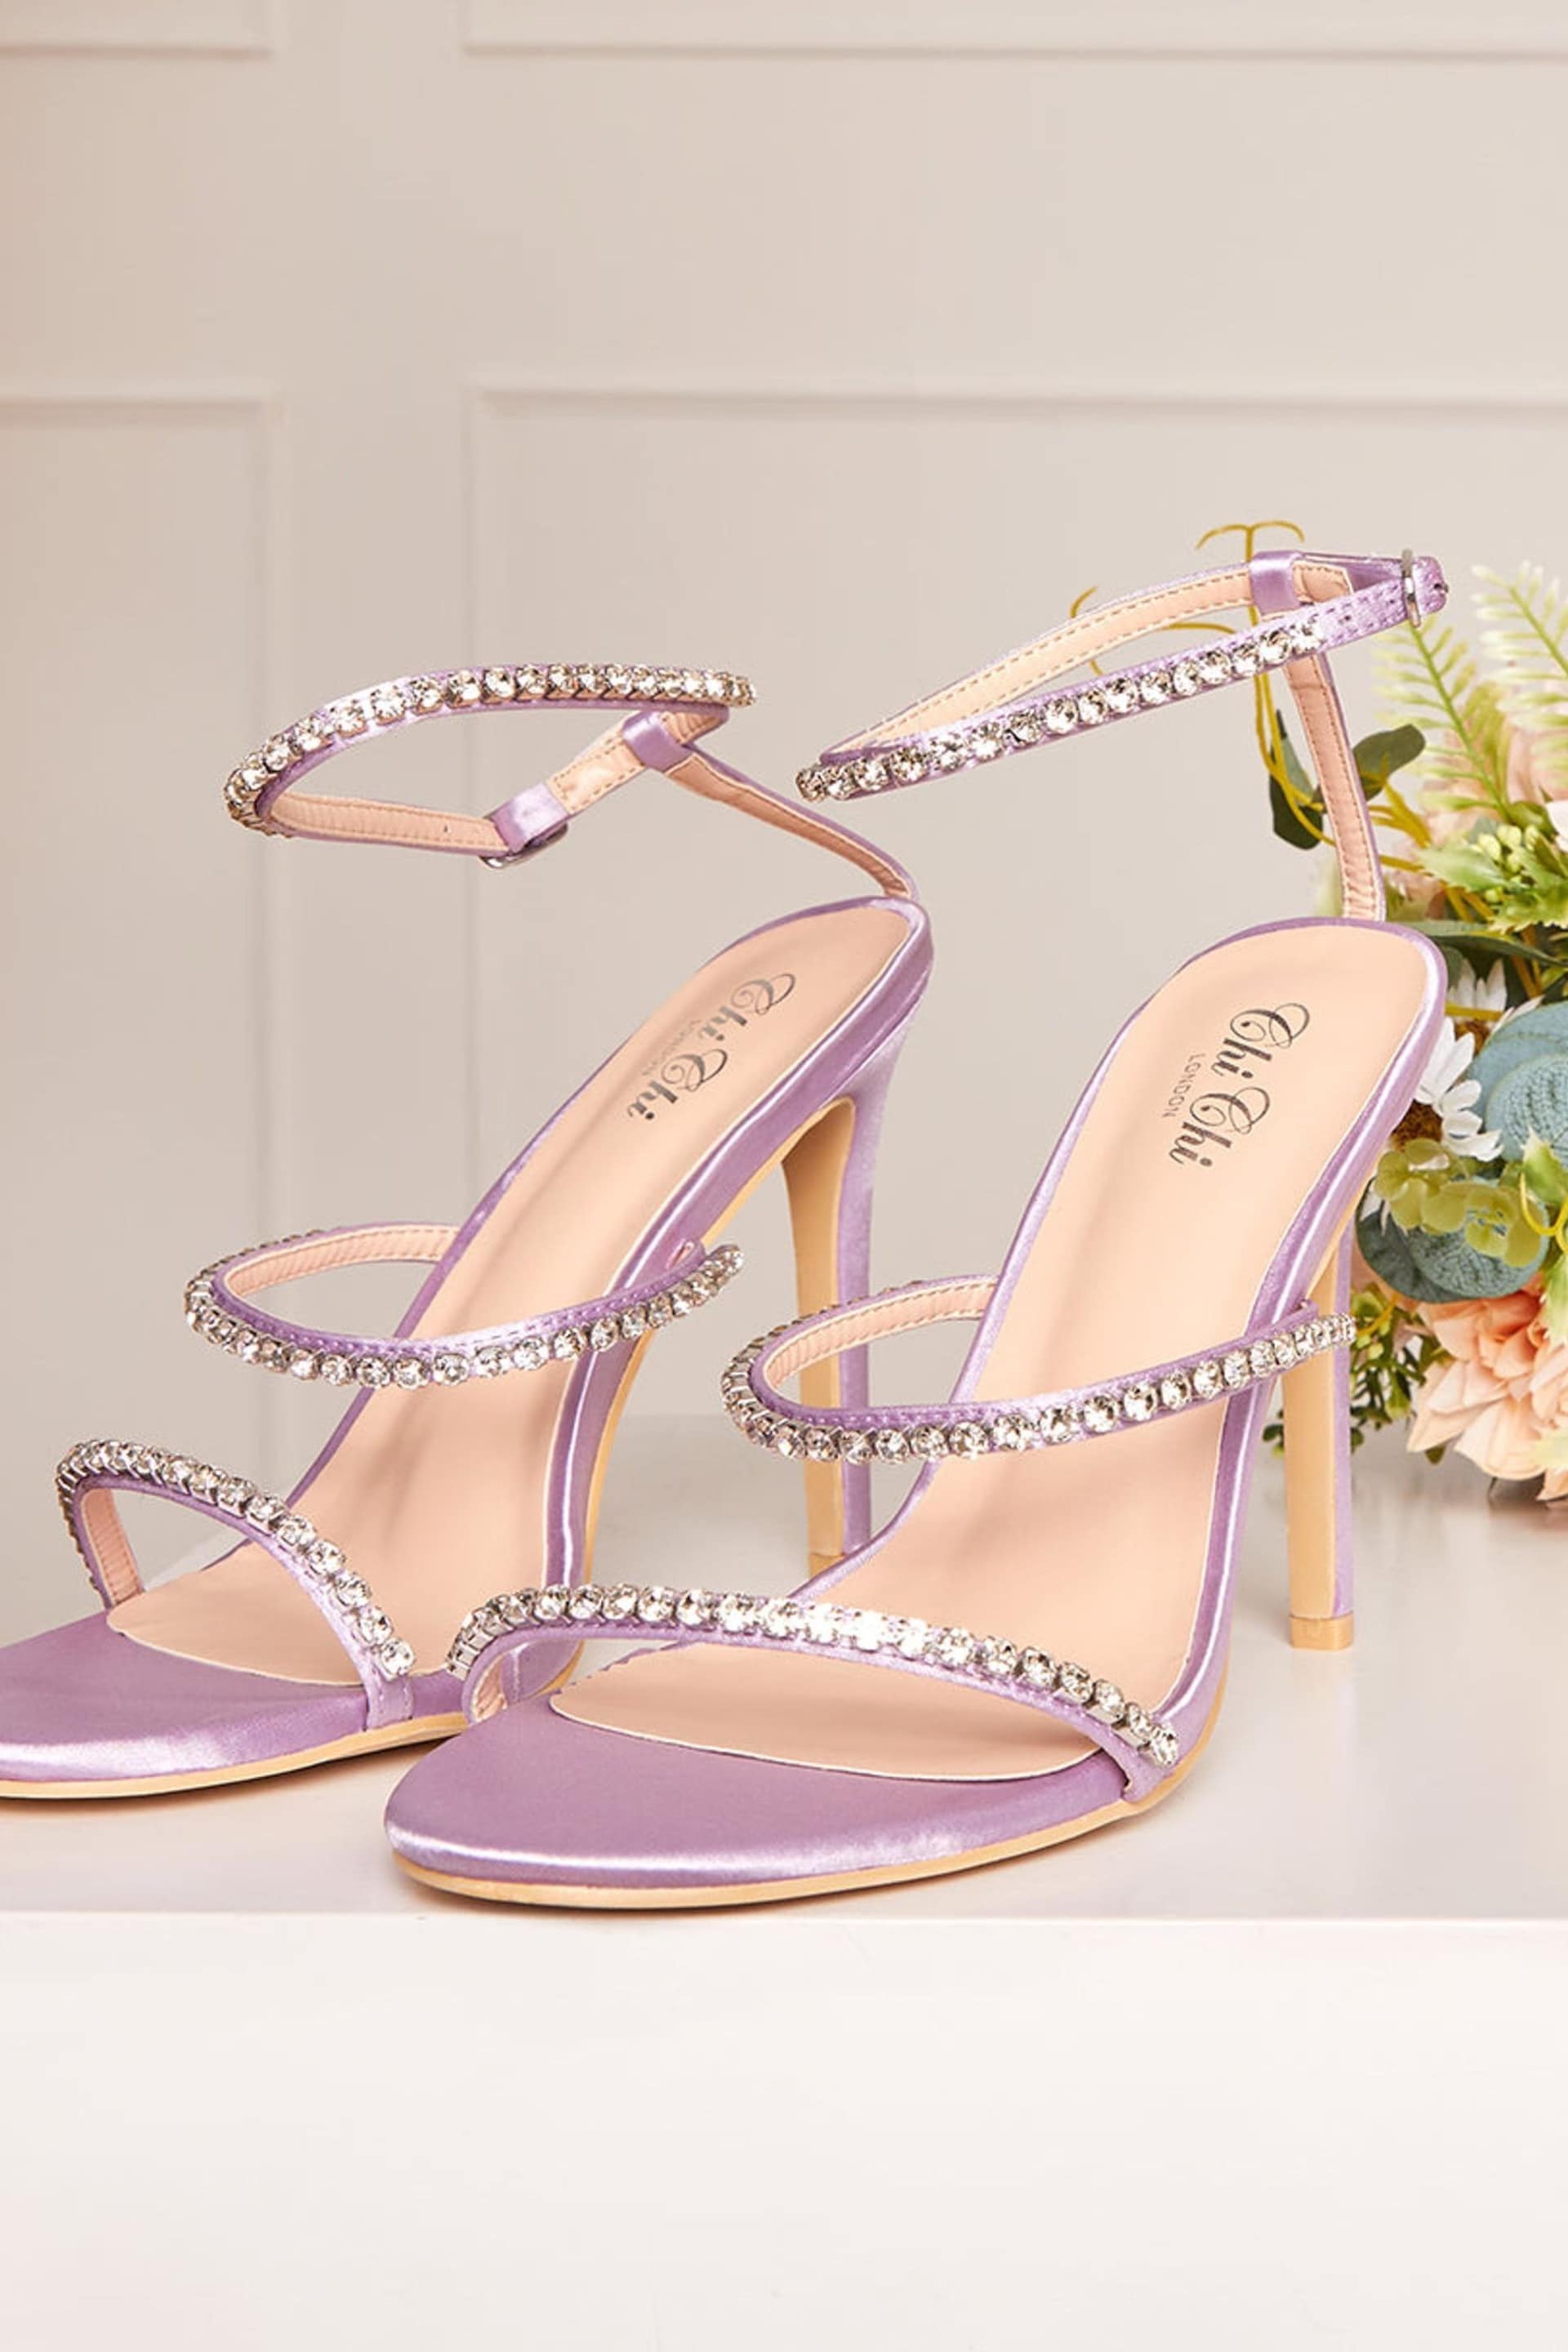 Chi Chi London Purple Diamante High Heel Strap Sandals - Image 4 of 5